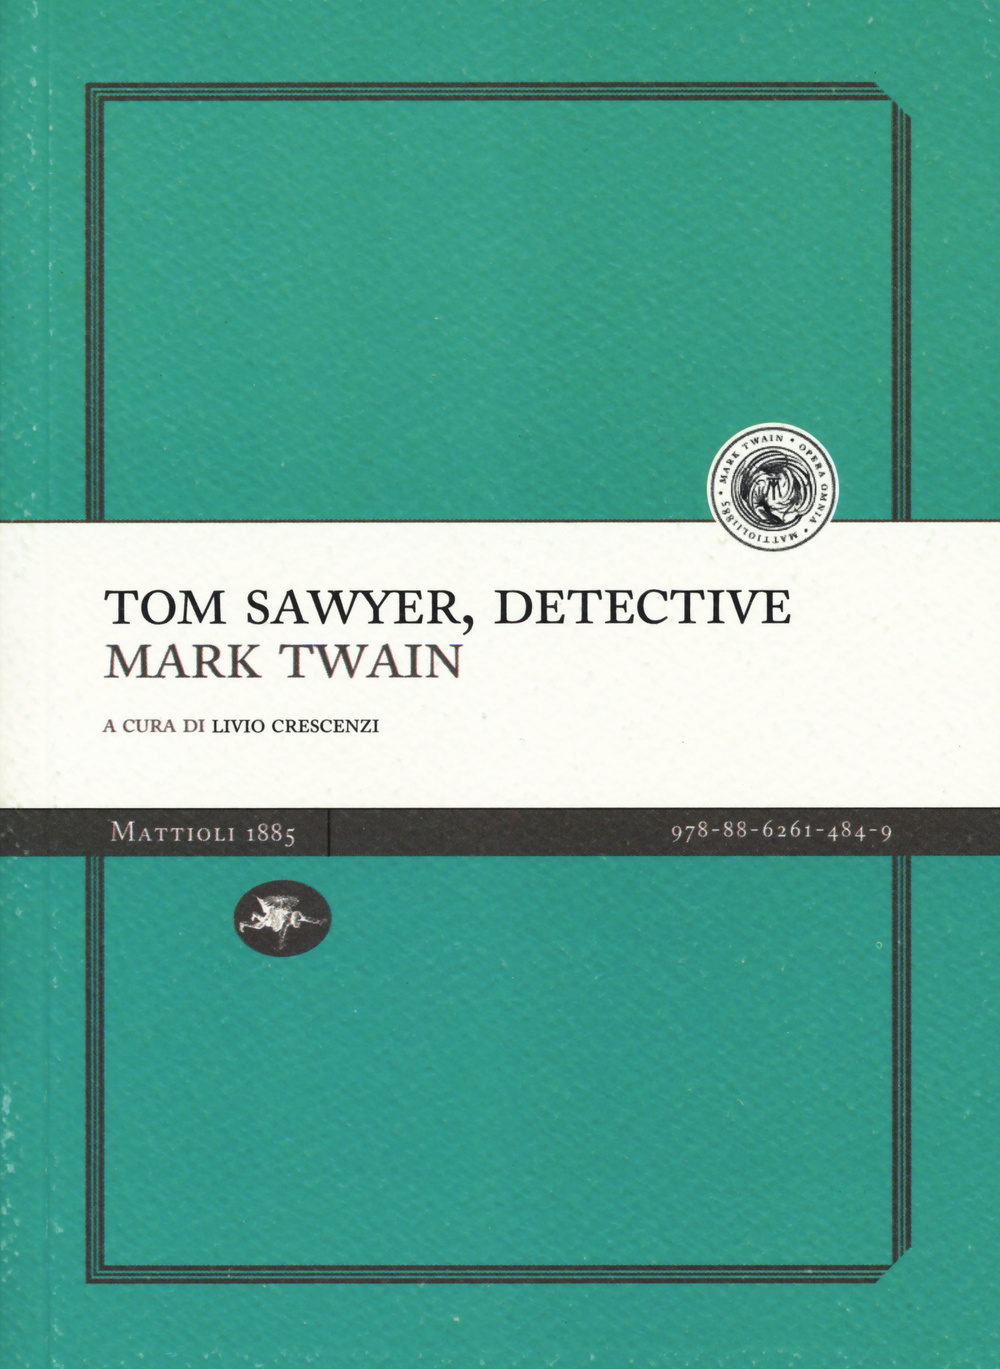 Tom Sawyer detective